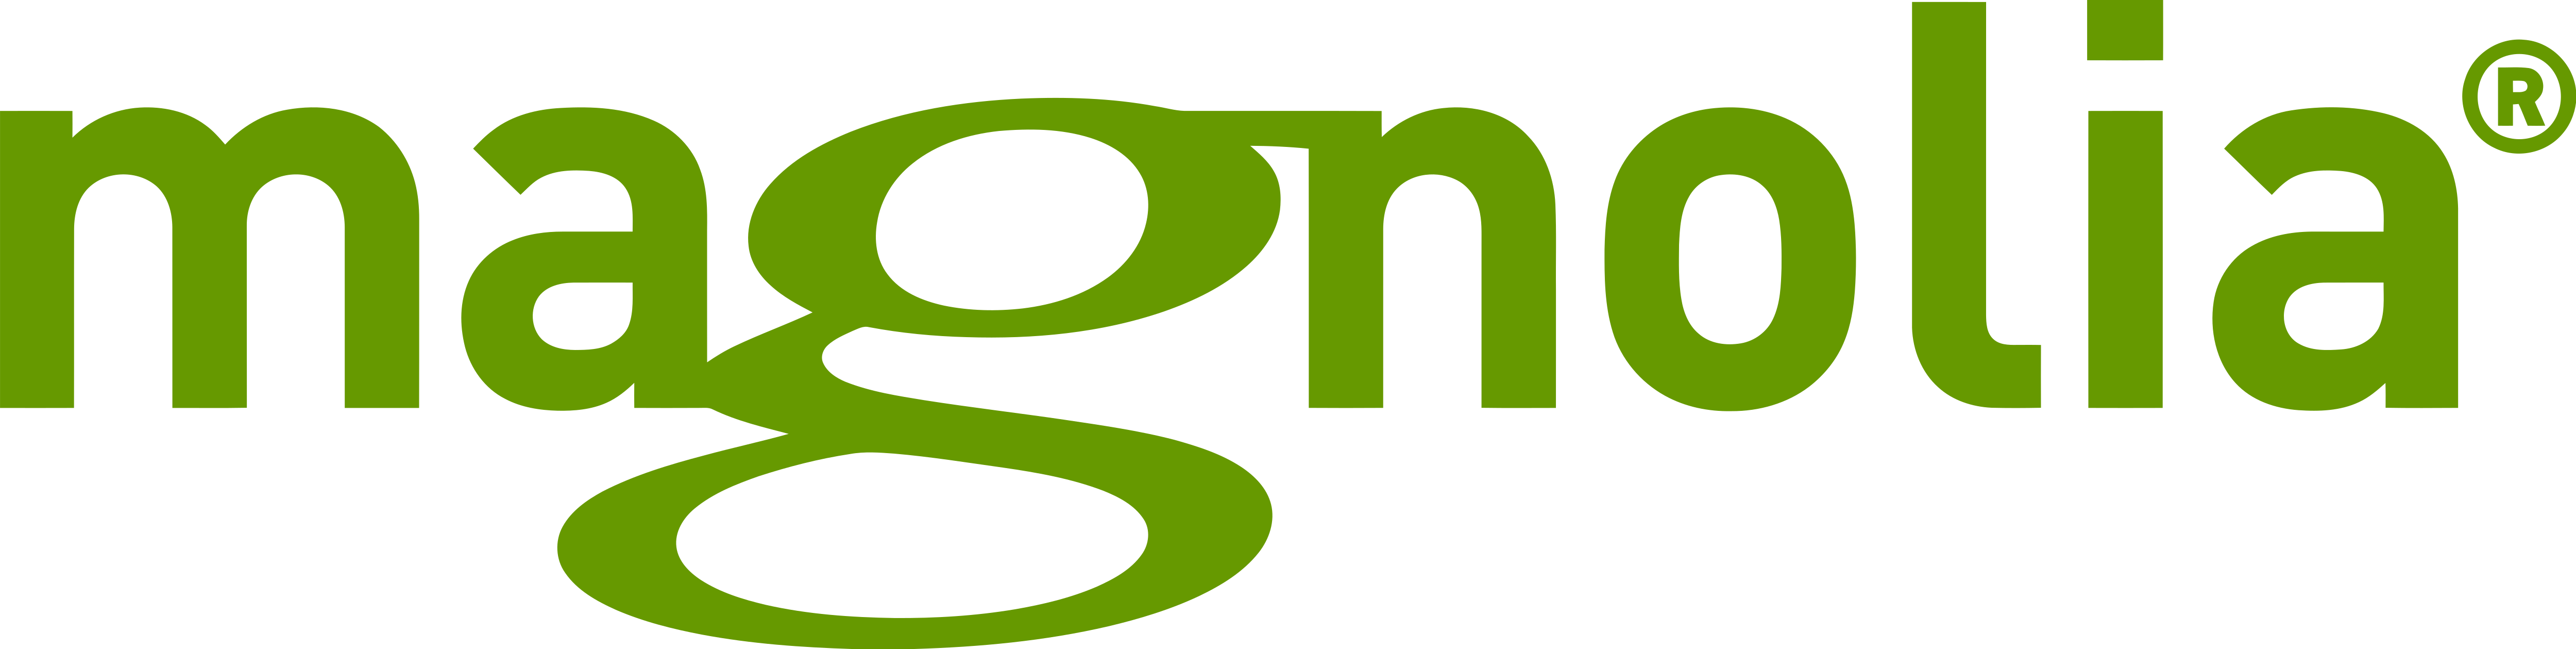 Magnolia Brand Logo